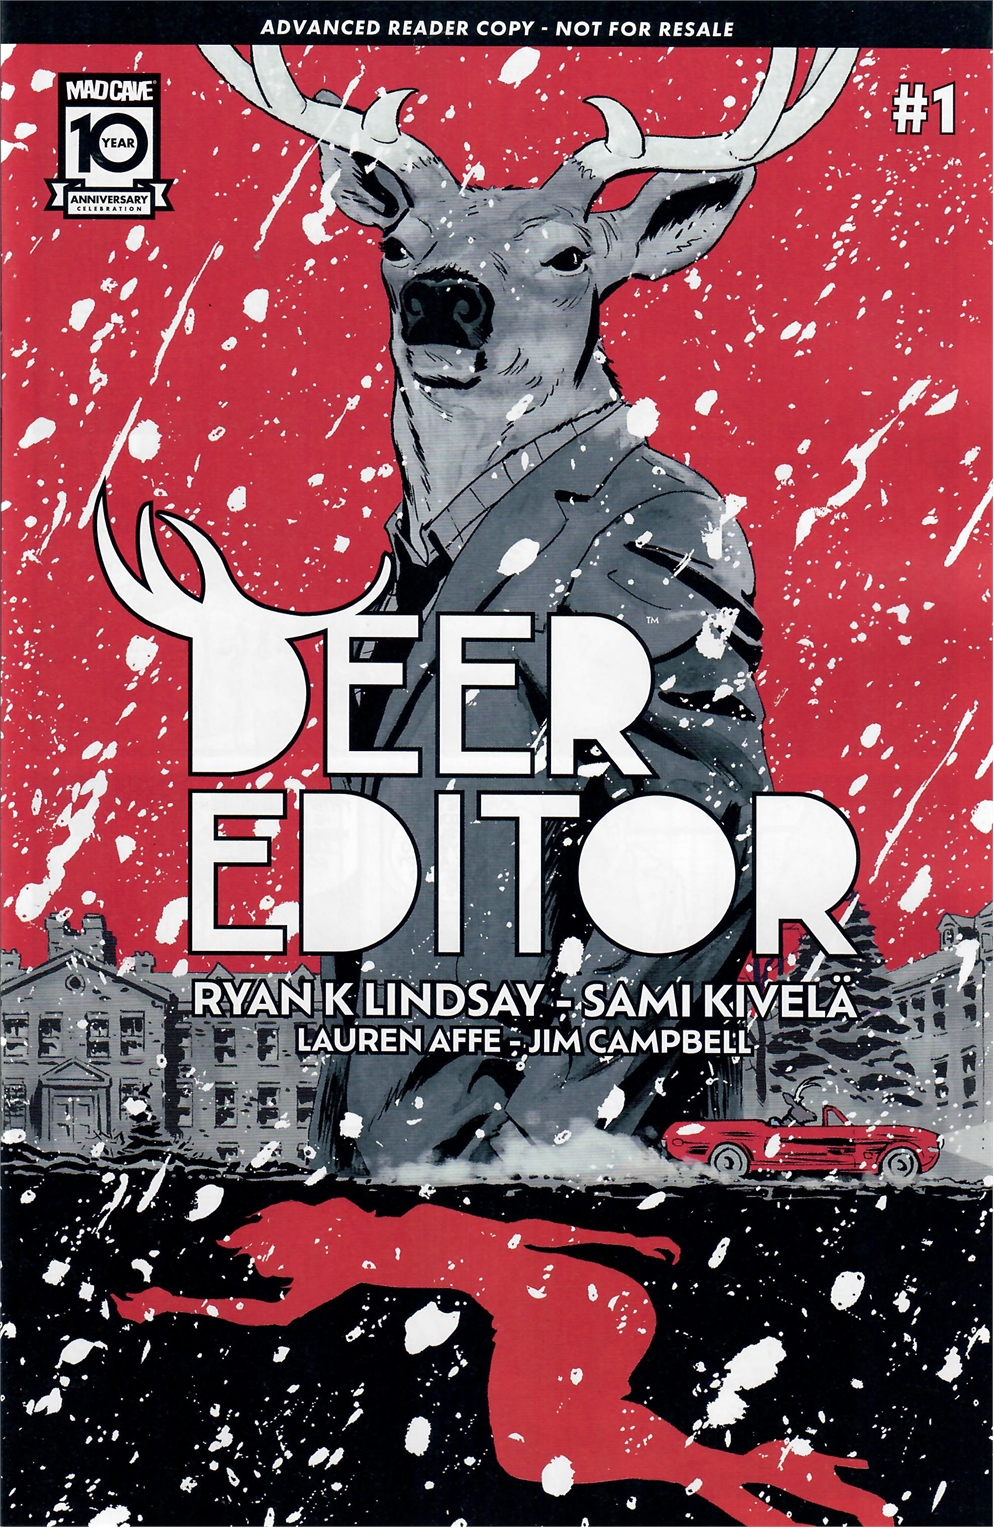 Deer Editor #1 Advanced Reader Copy